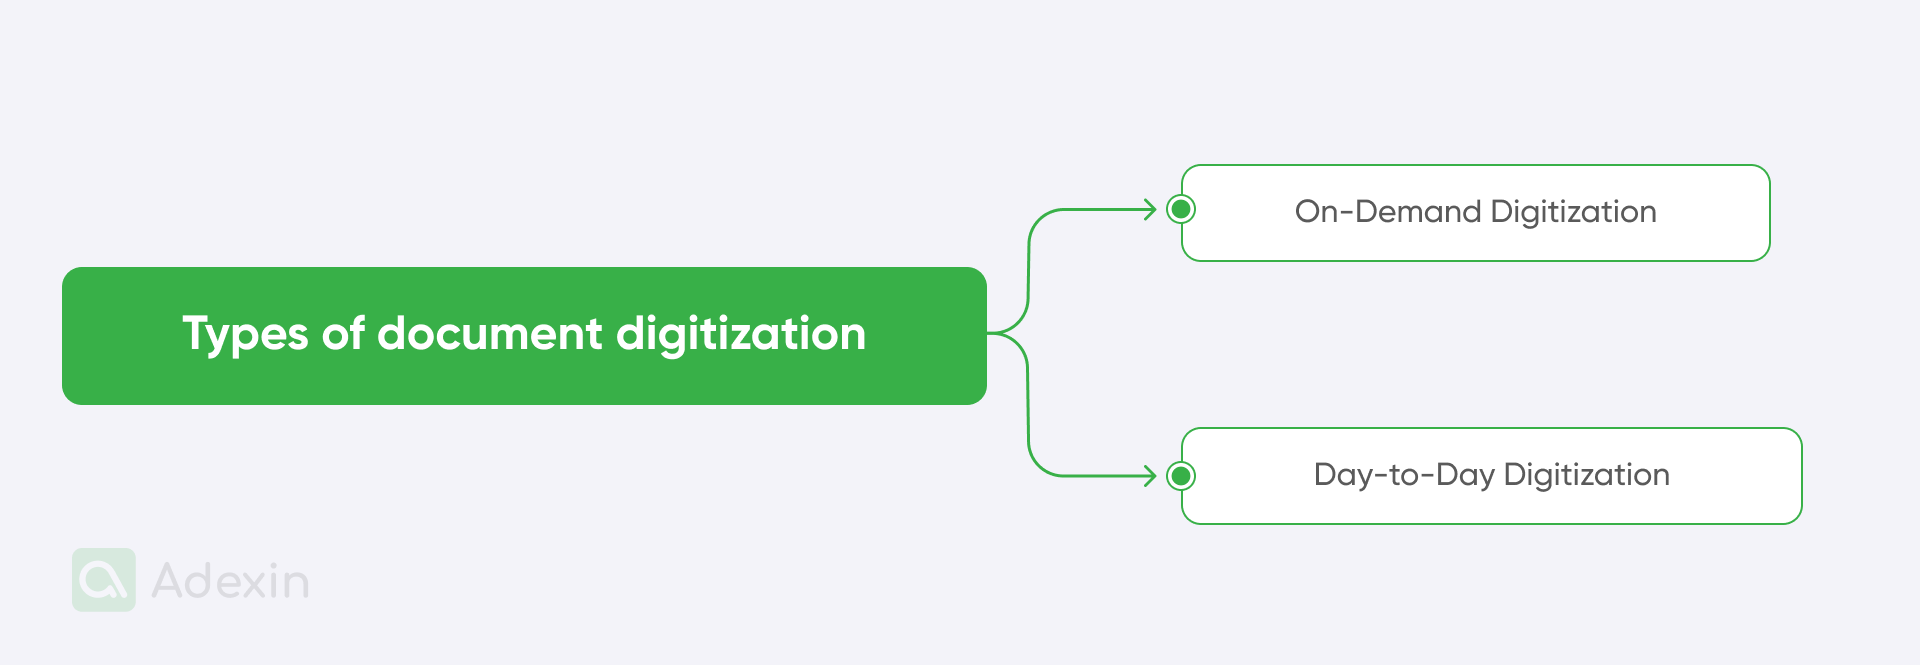 Types of document digitization